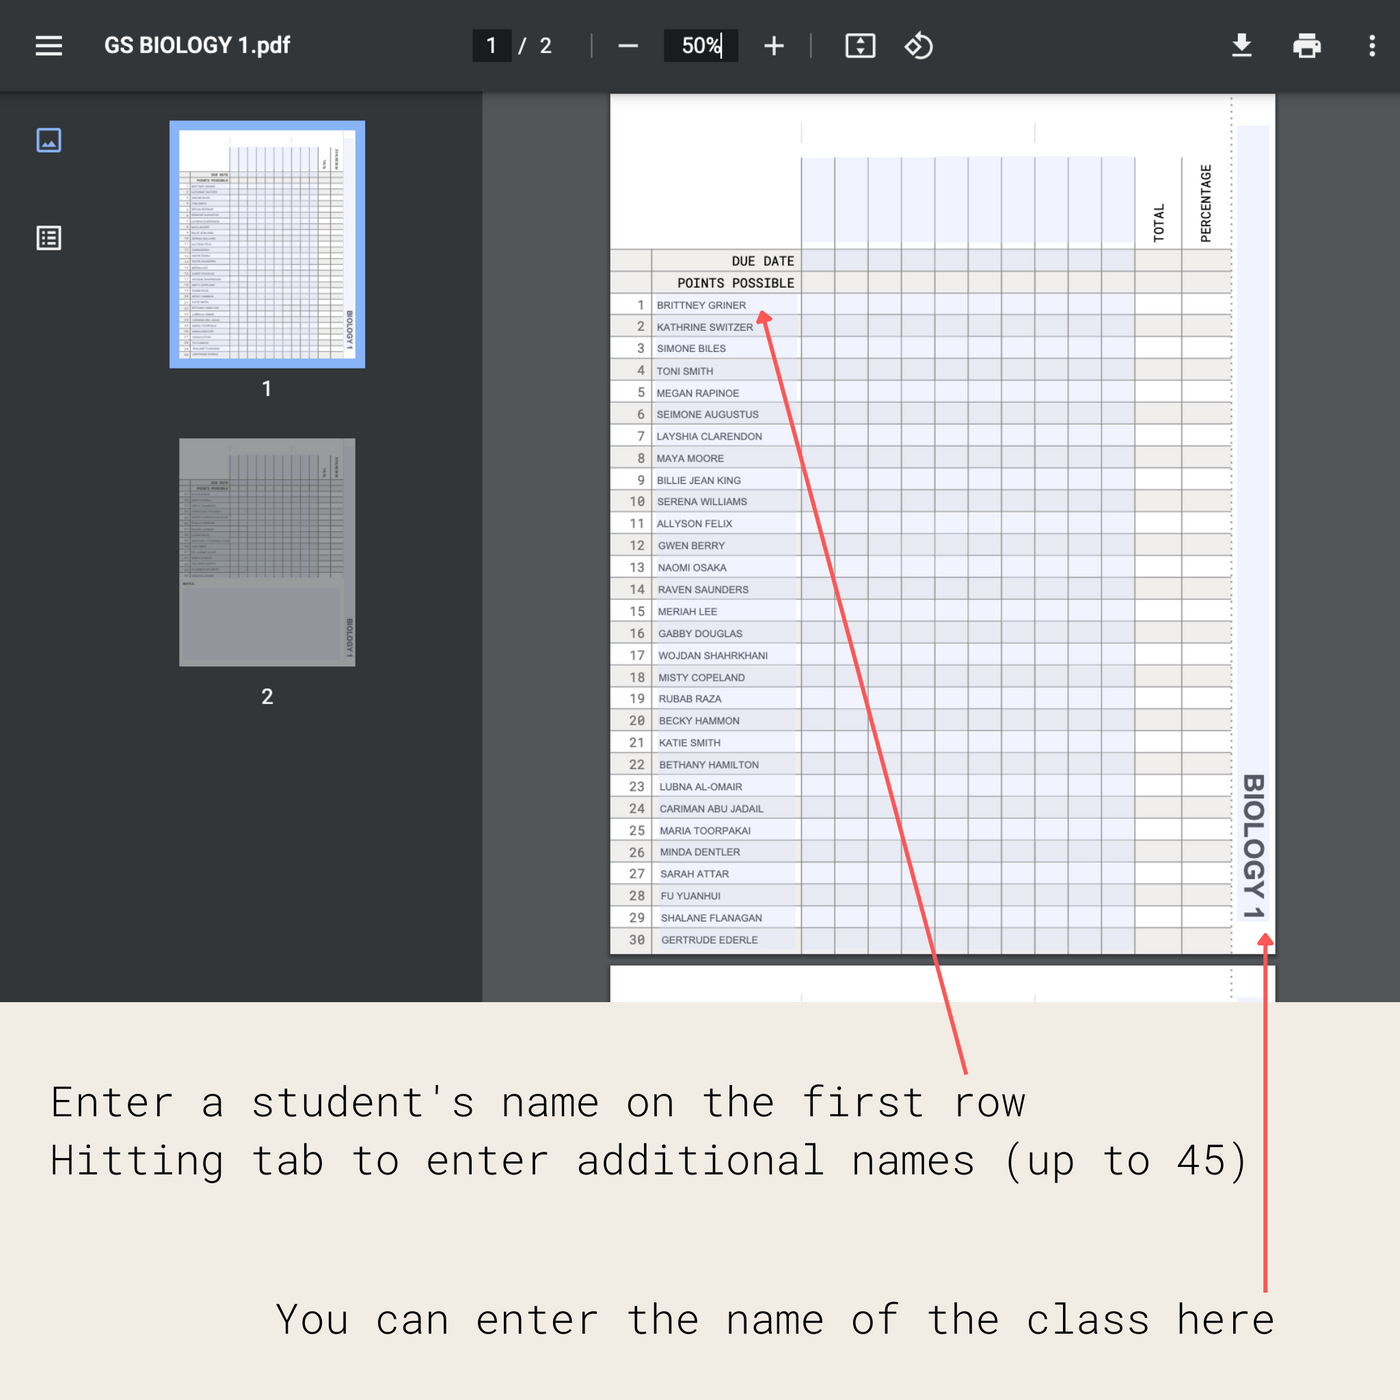 Grading Sheets: Editable PDF